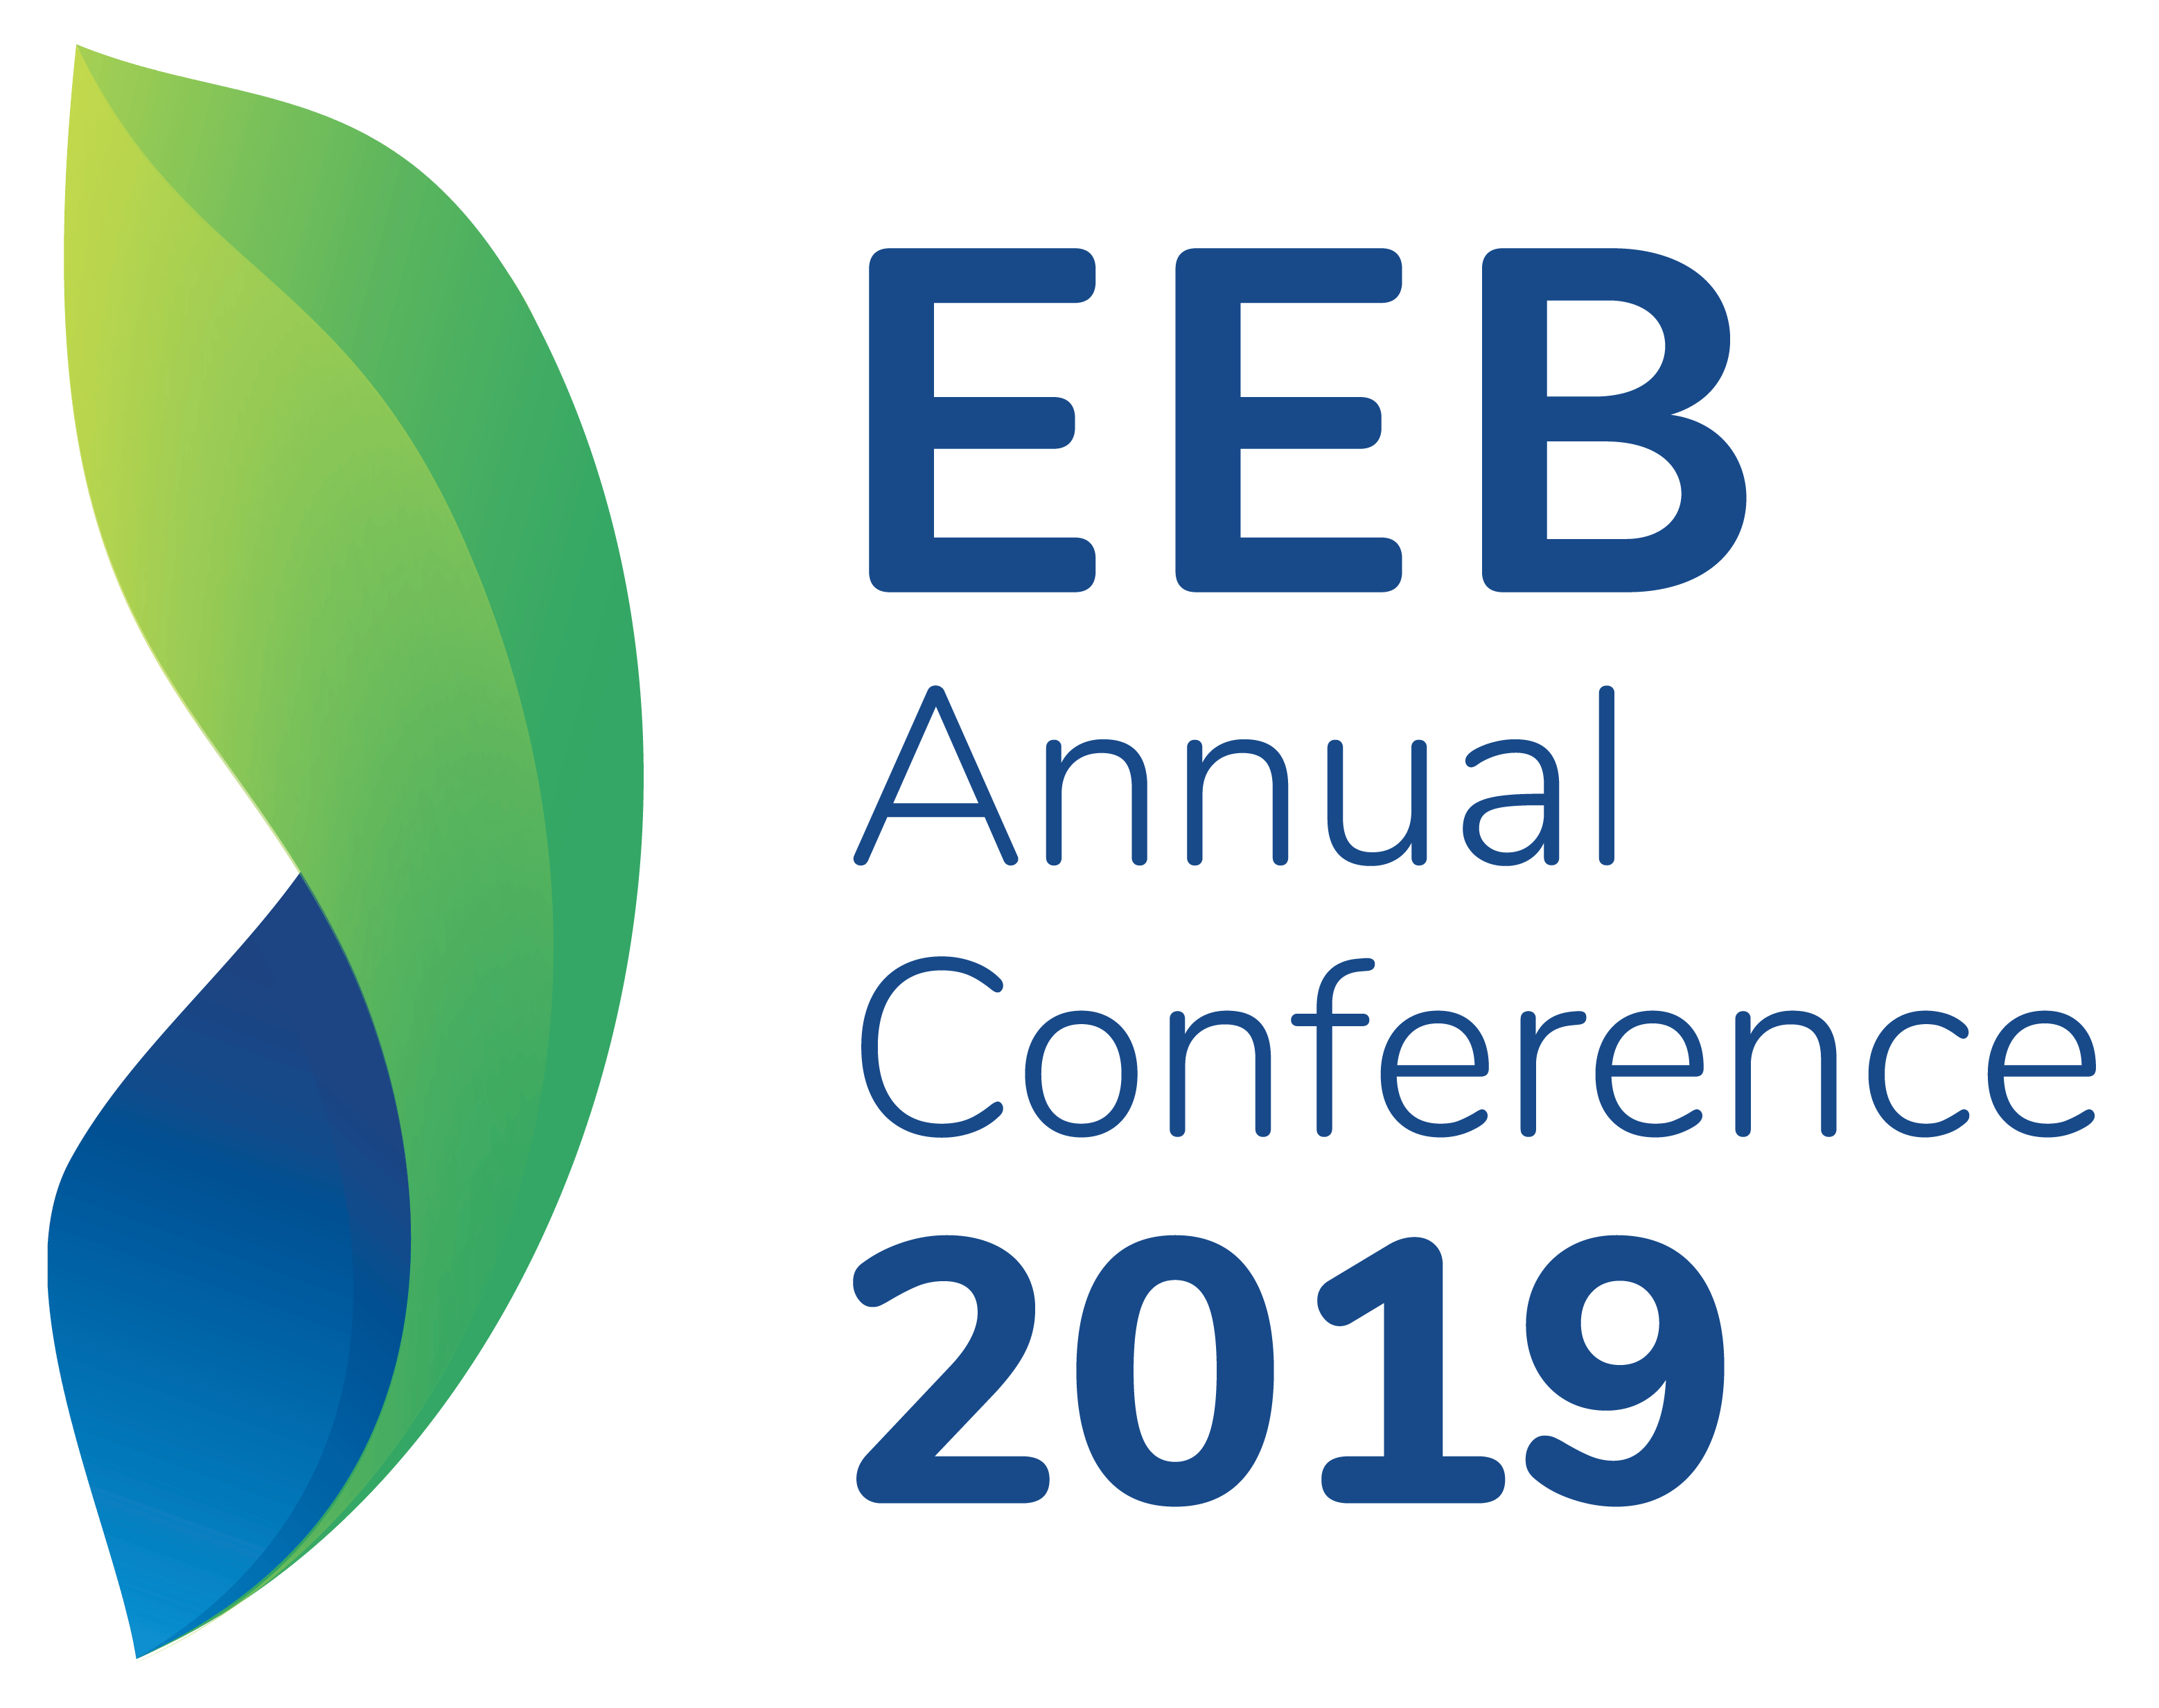 EEB Logo - EEB Conference | On 18-19 November 2019, the European Environmental ...